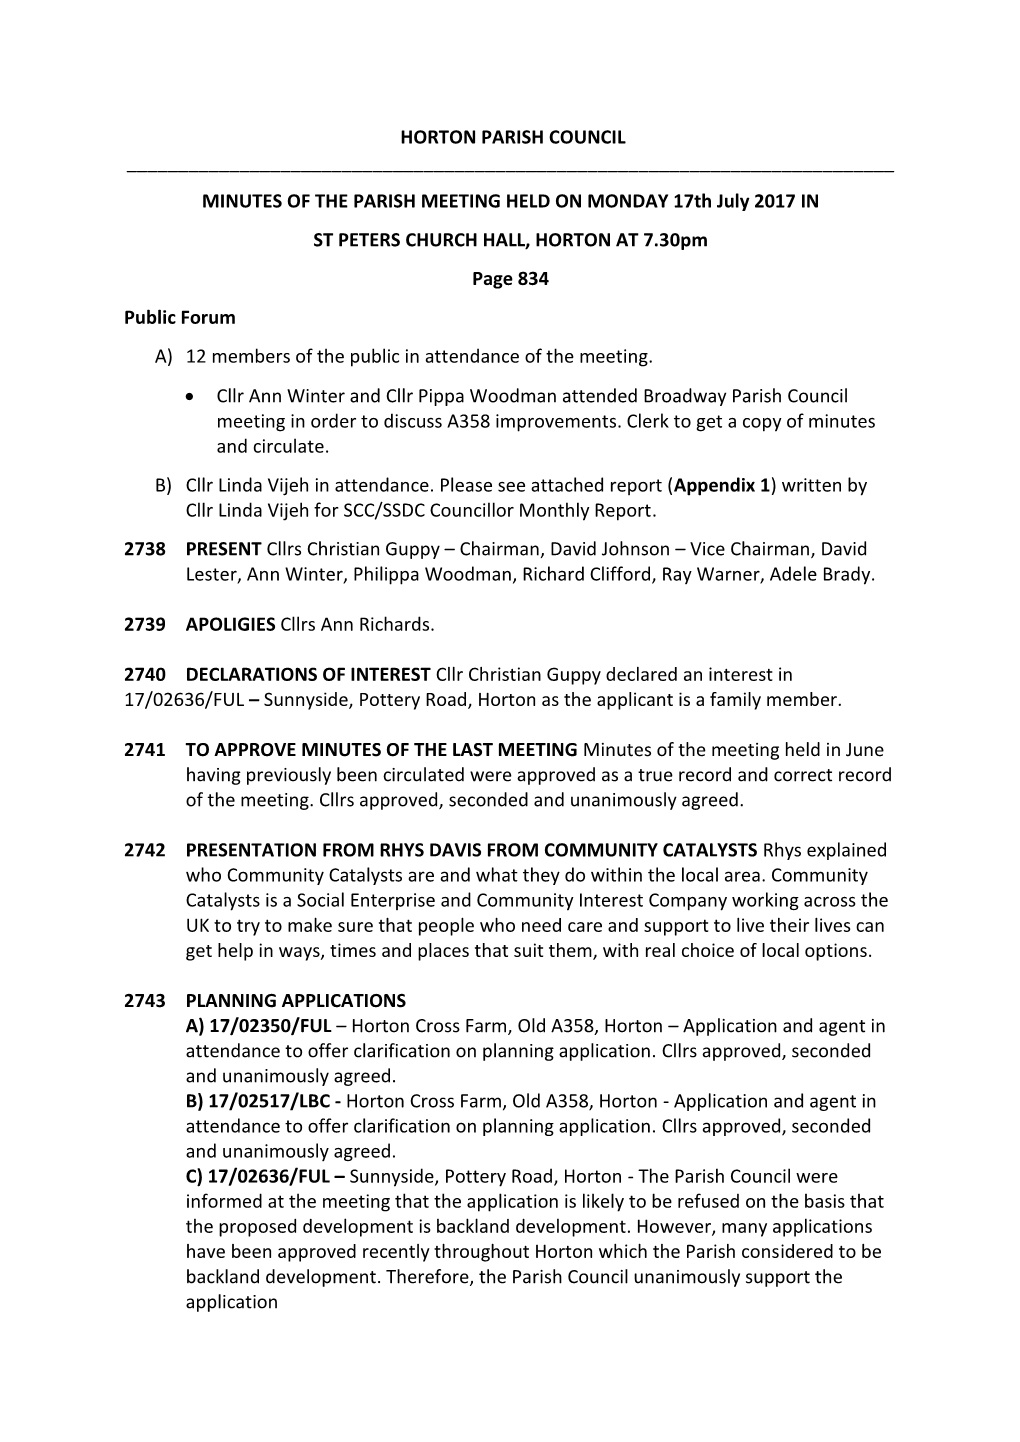 Horton Parish Council Minutes of the Parish Meeting